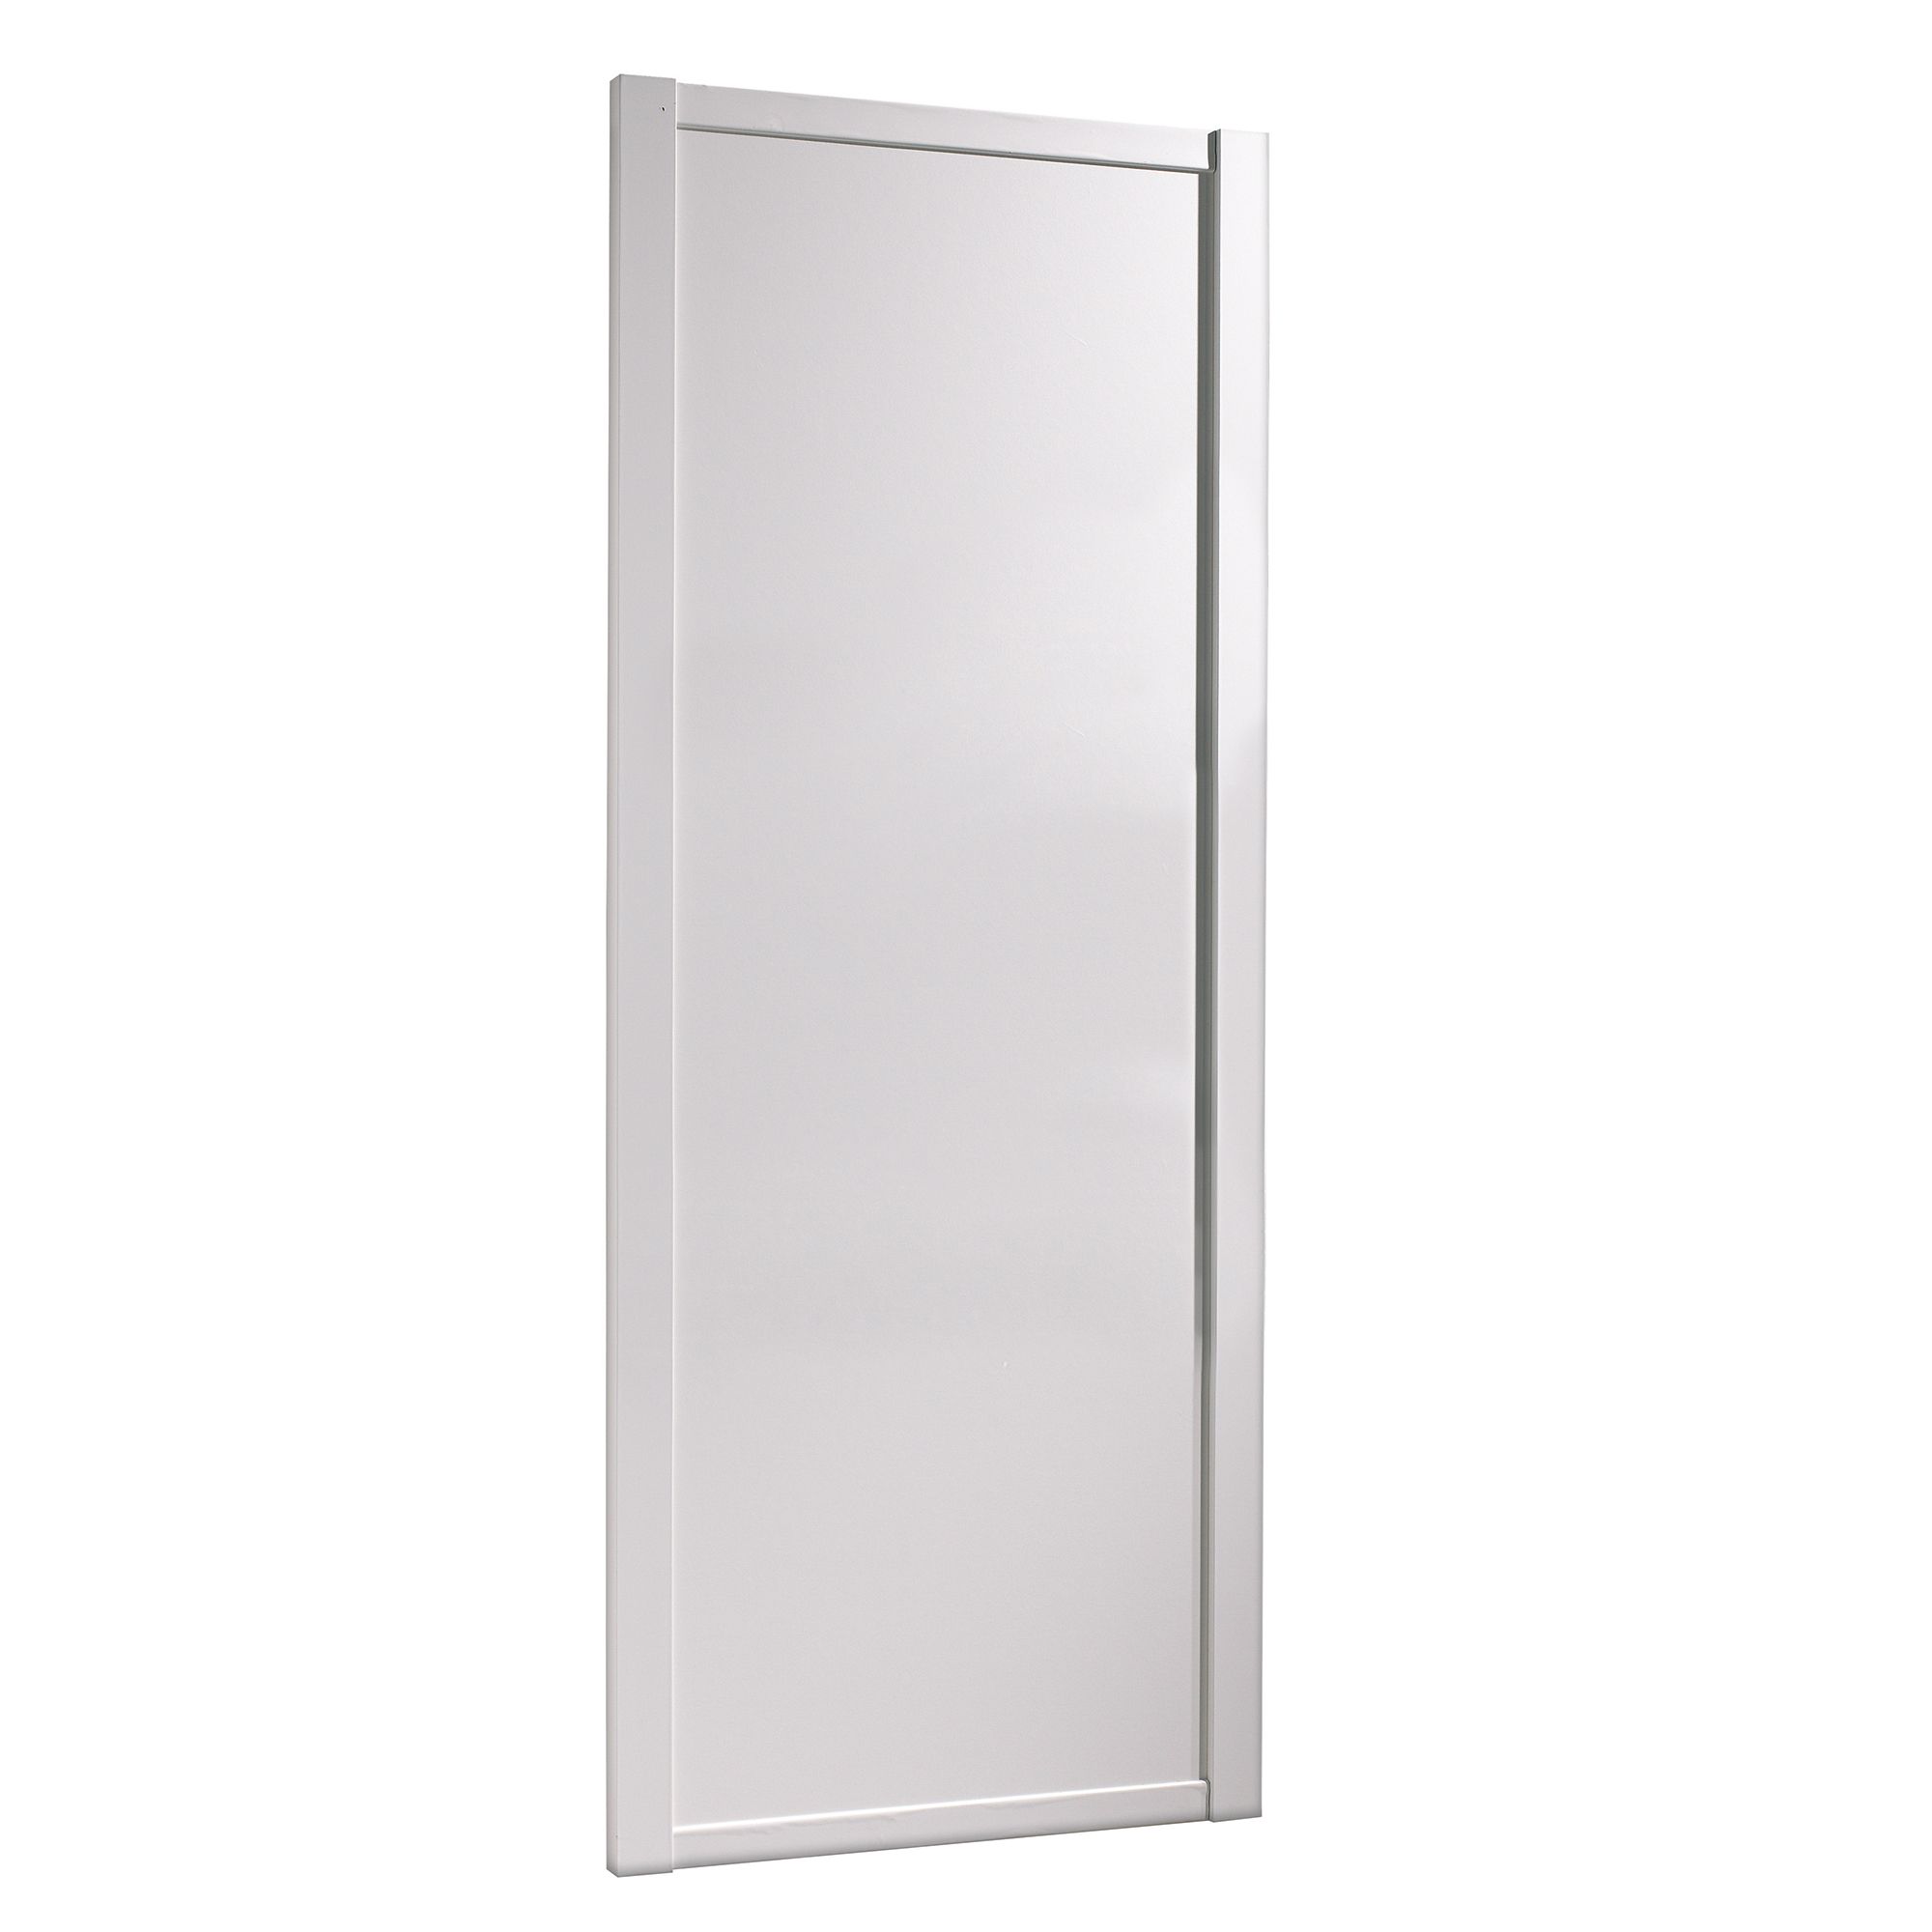 Spacepro Shaker White Sliding wardrobe door (H) 2220mm x (W) 914mm